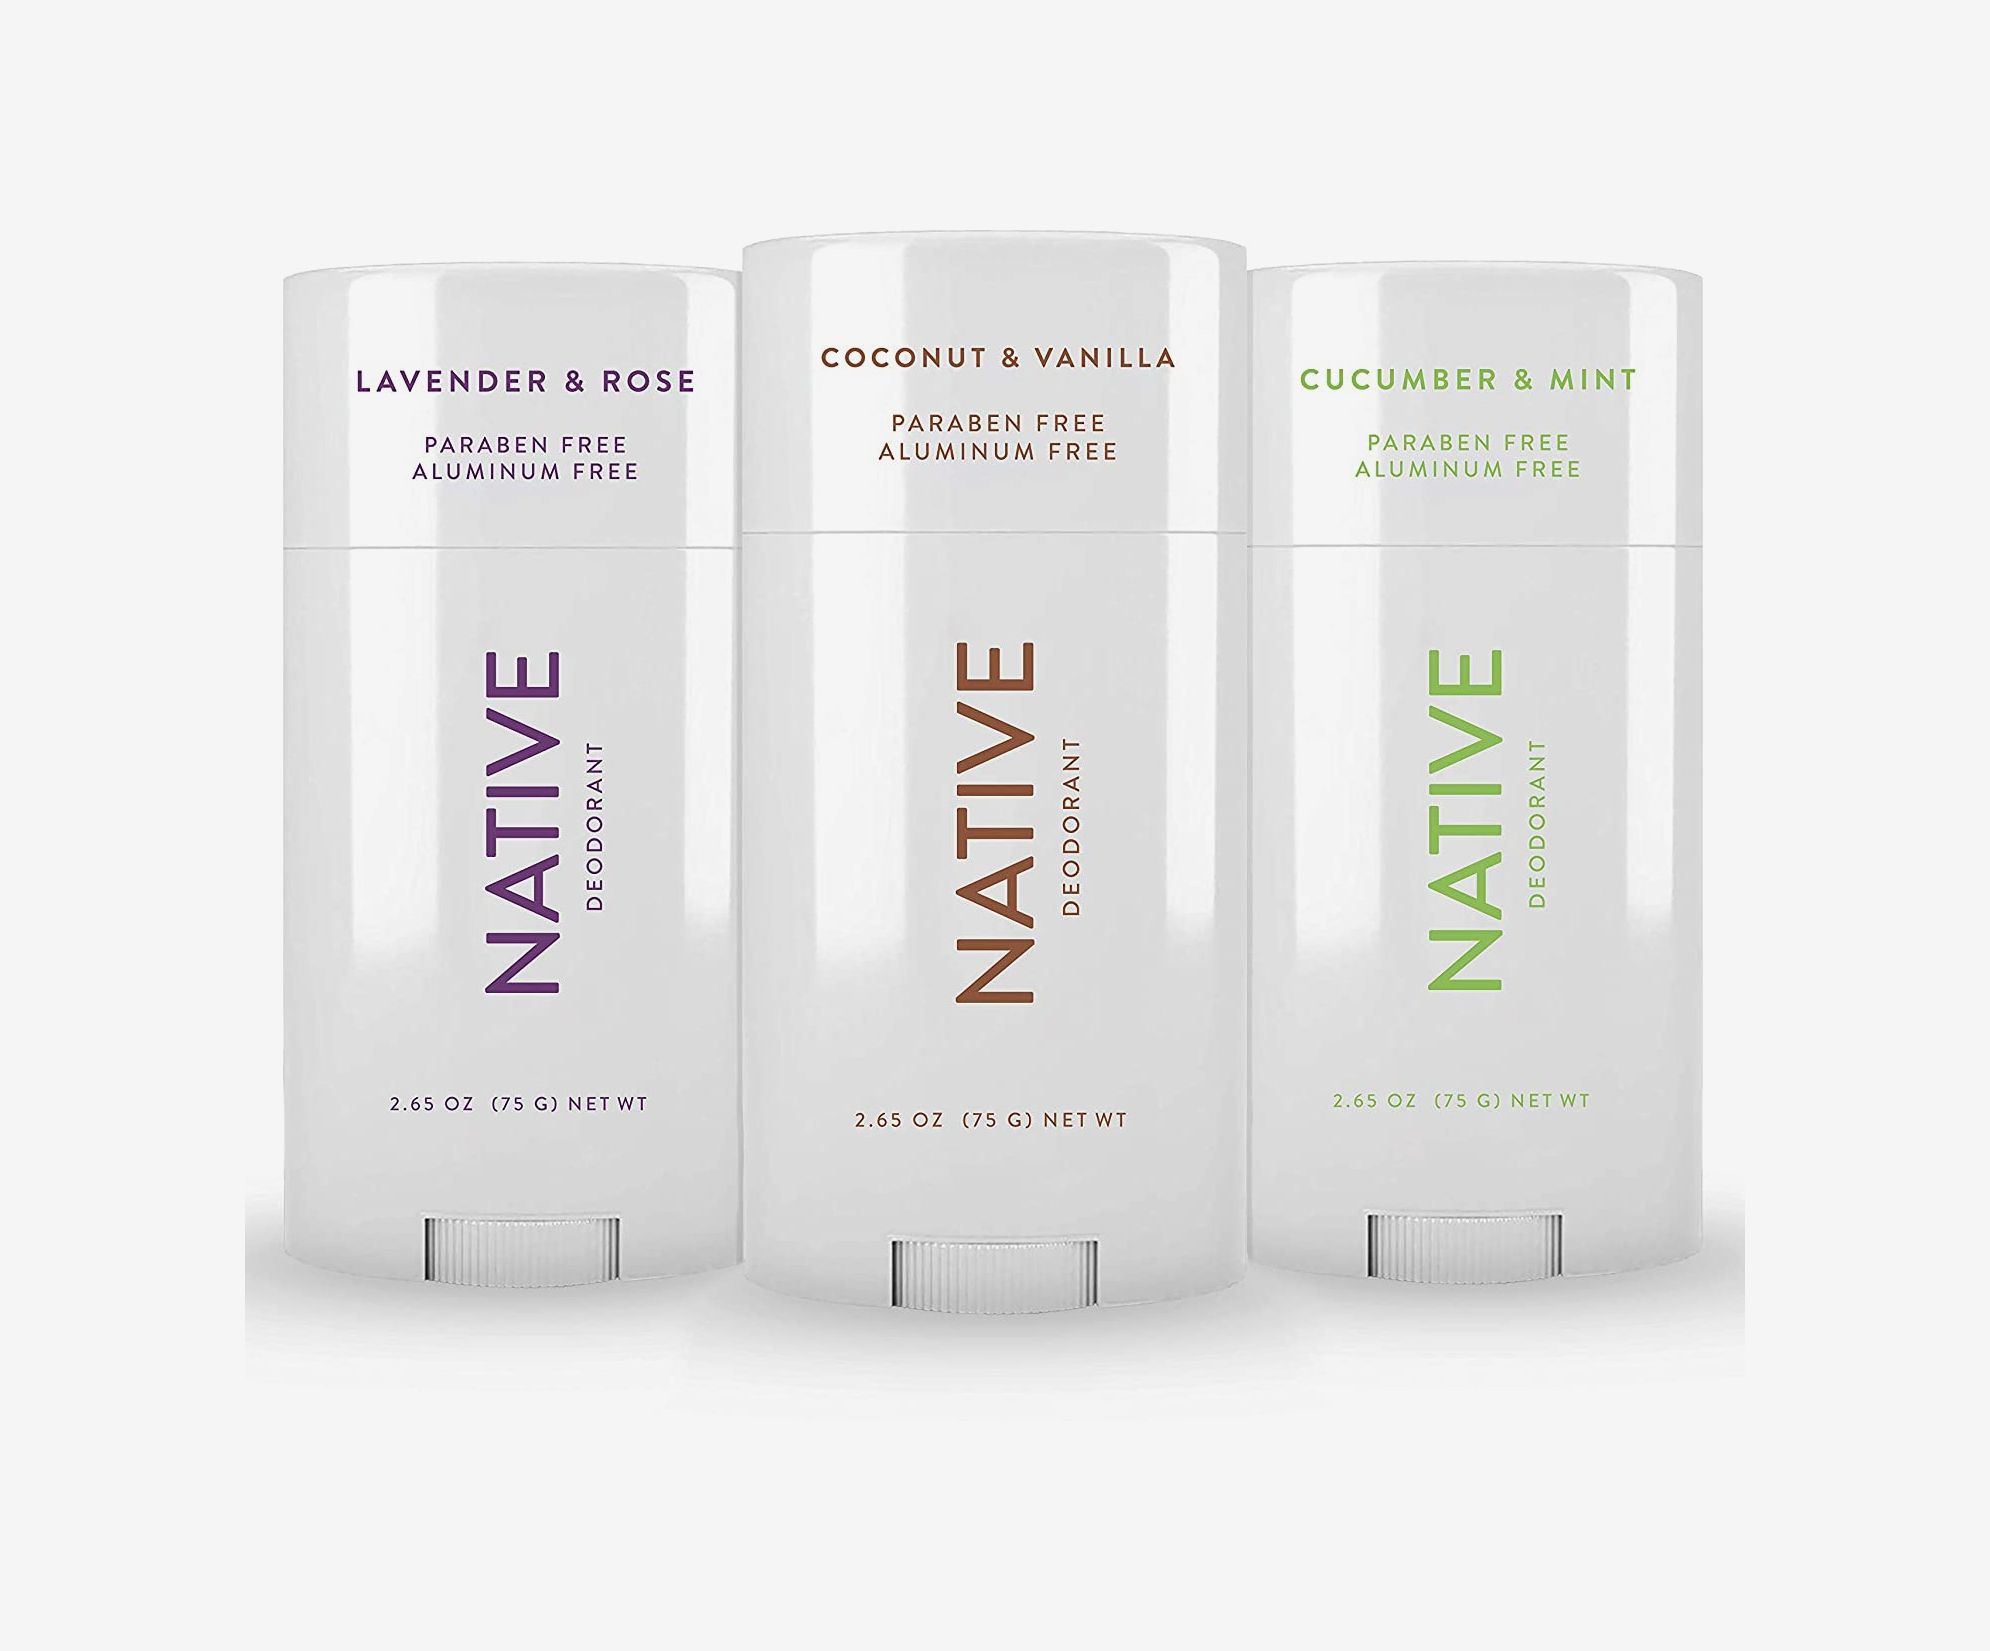 Native Natural Deodorant Sale Amazon 2020 | The Strategist